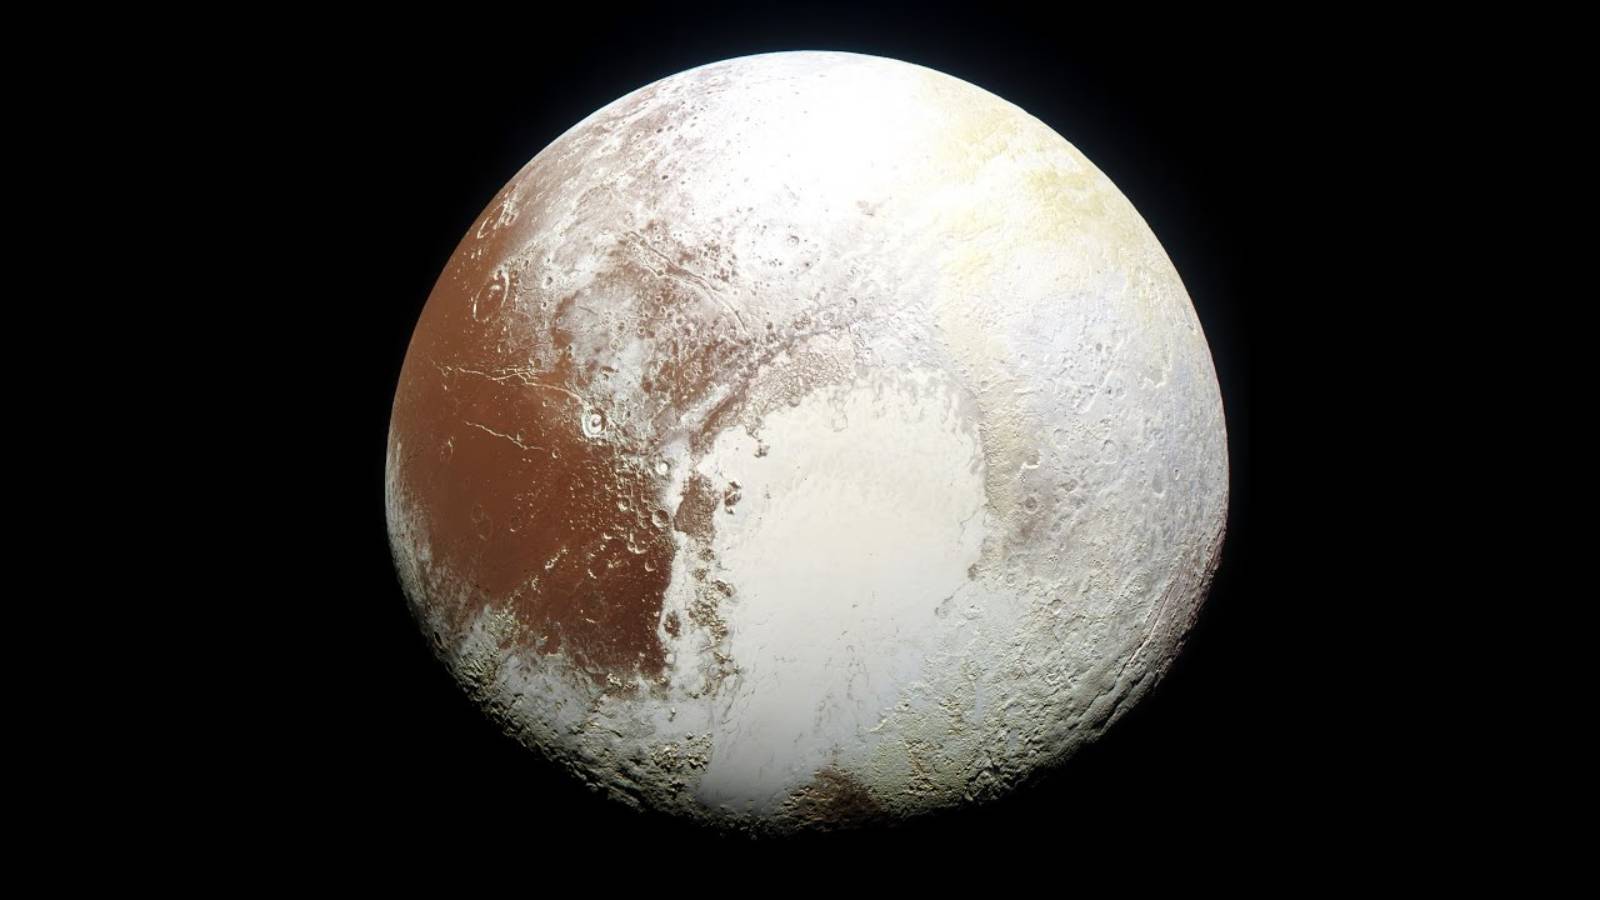 Planeta Pluto ocean